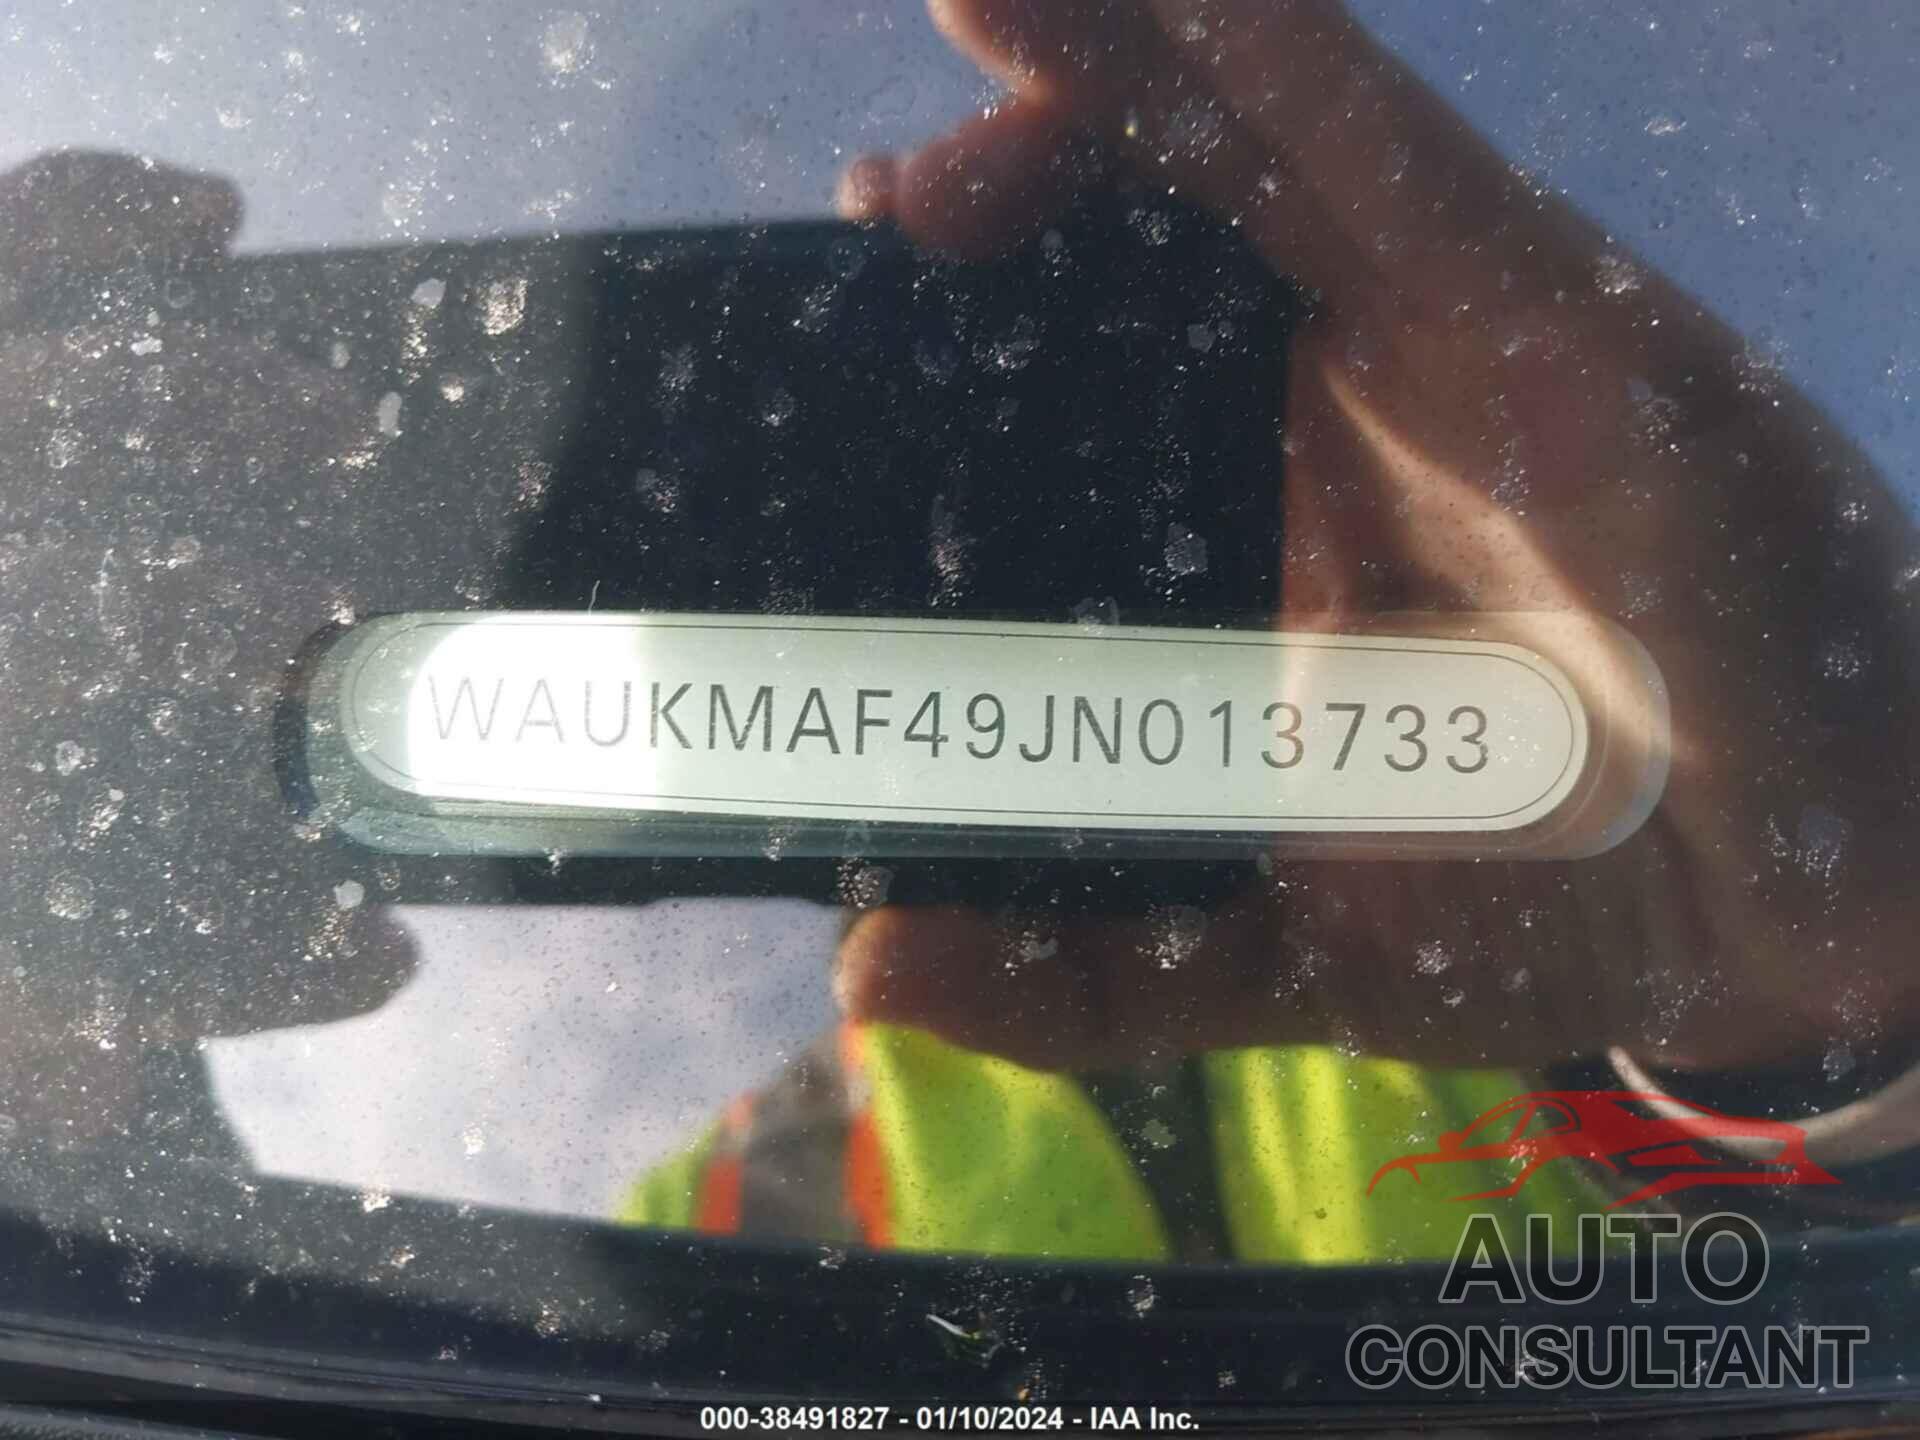 AUDI A4 2018 - WAUKMAF49JN013733